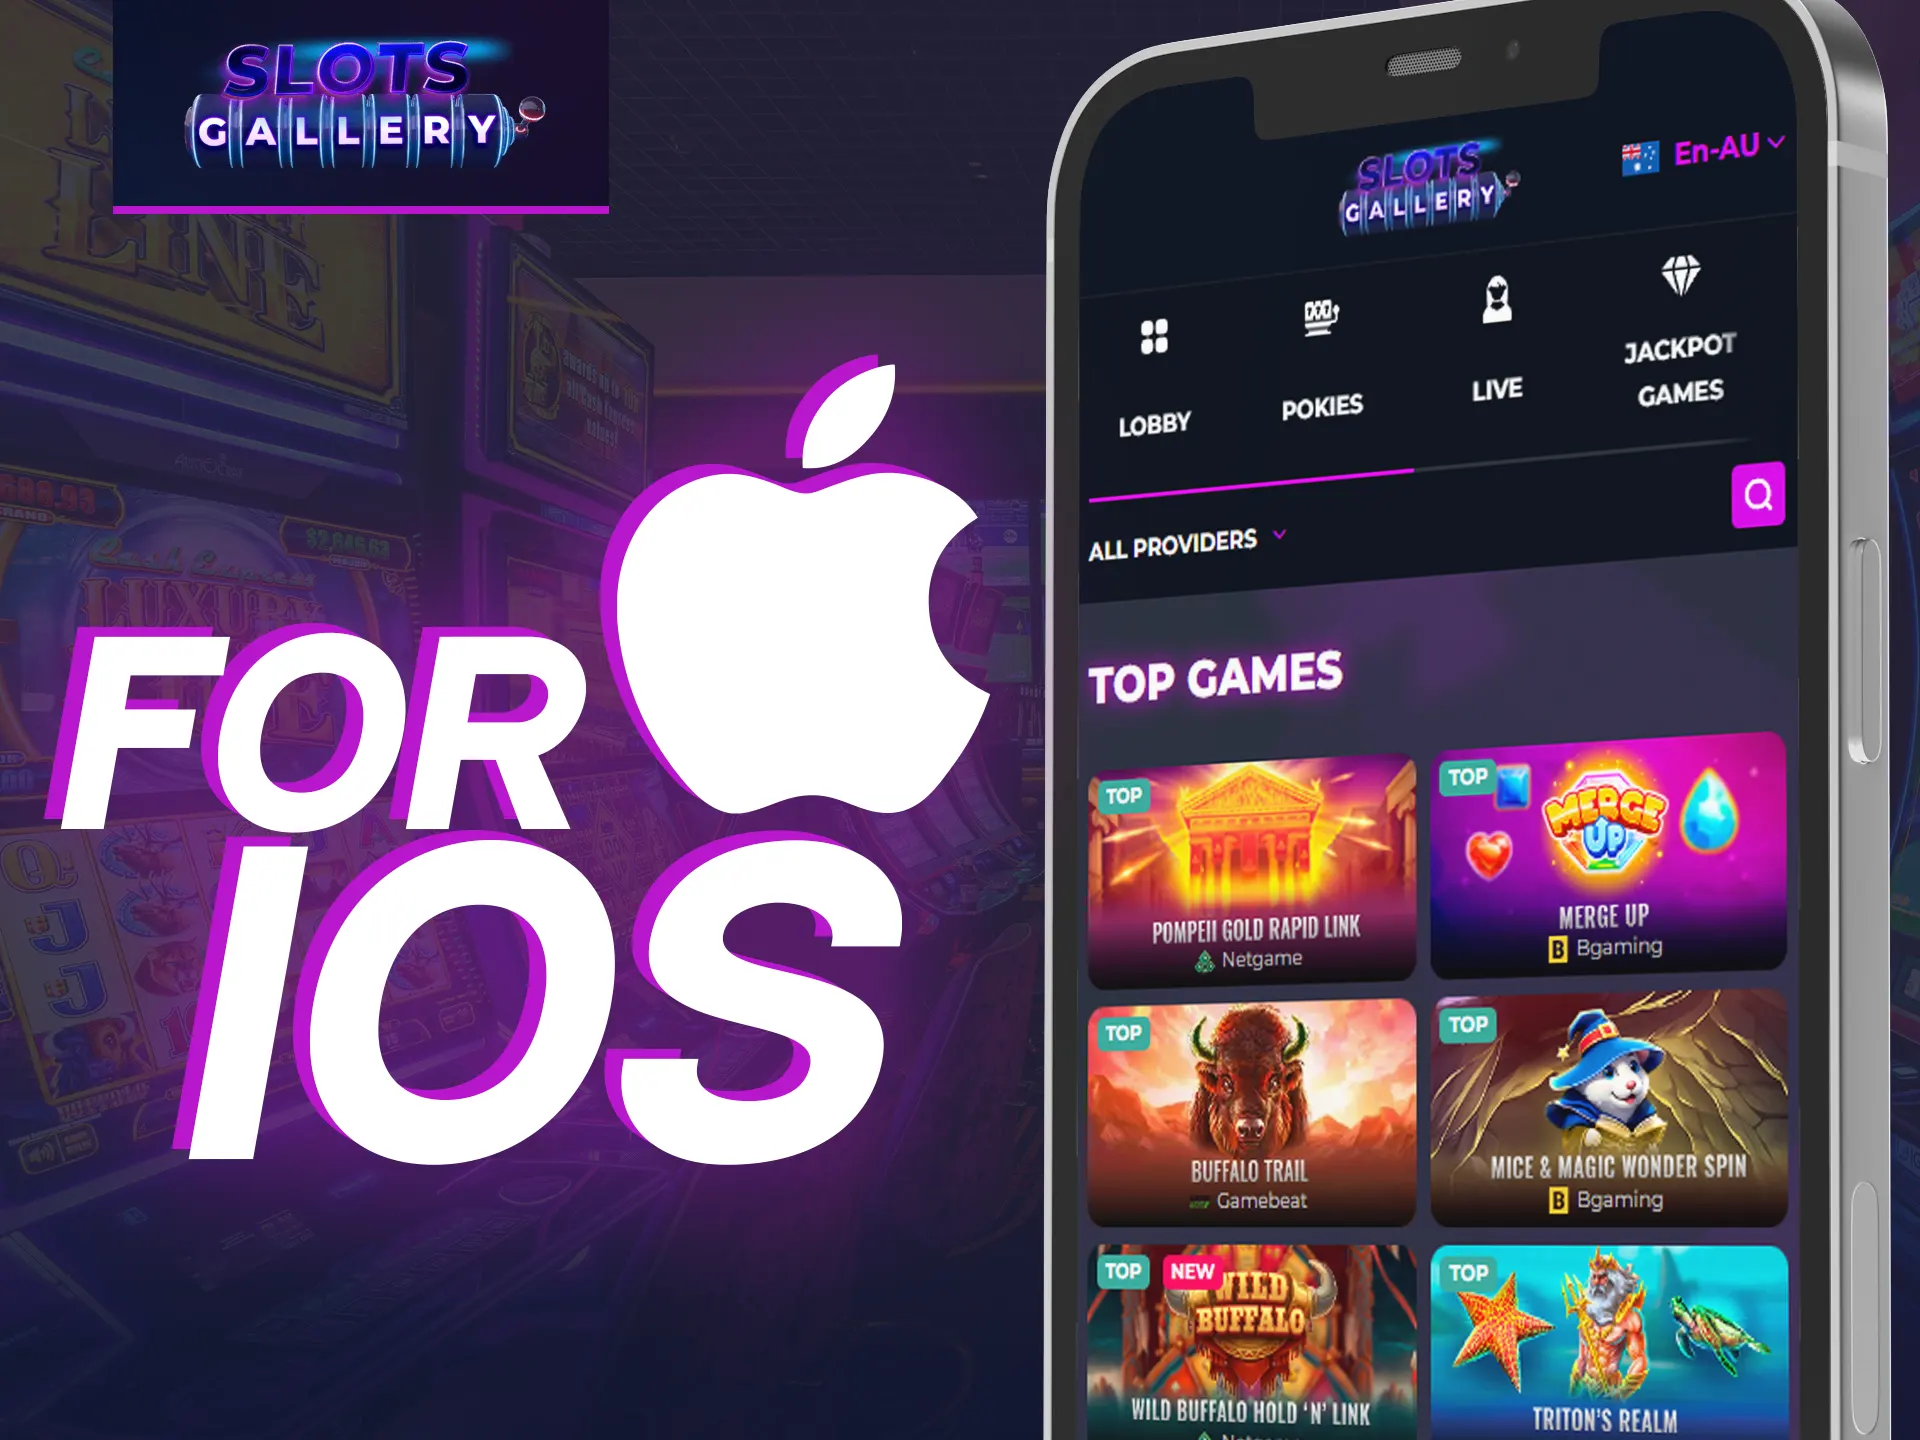 Slots Gallery provides iOS version of app.